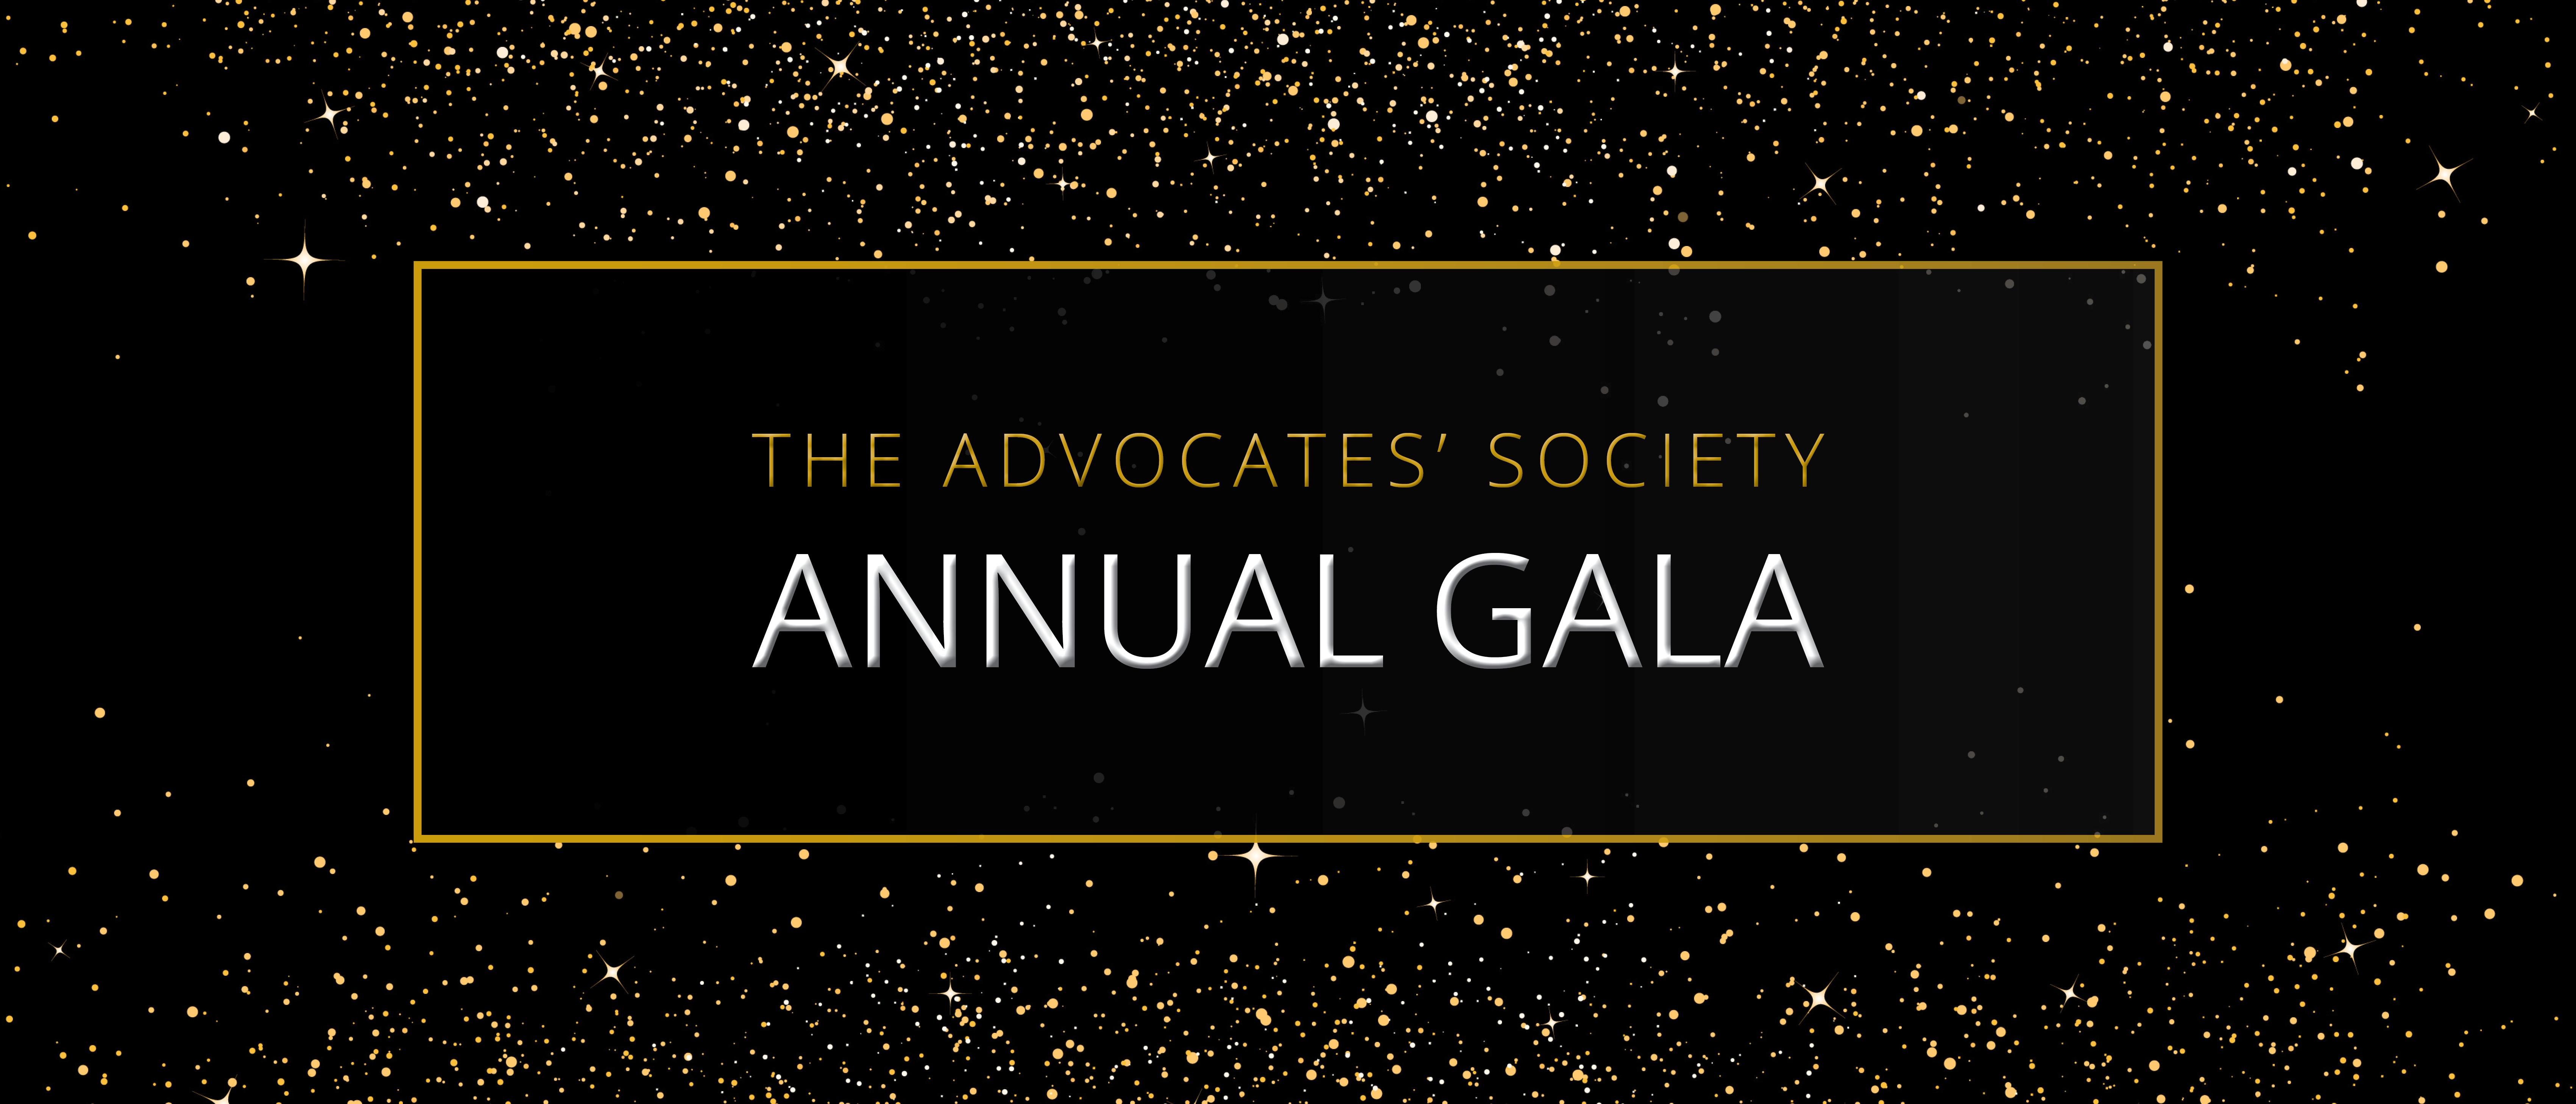 The Advocates' Society Annual Gala